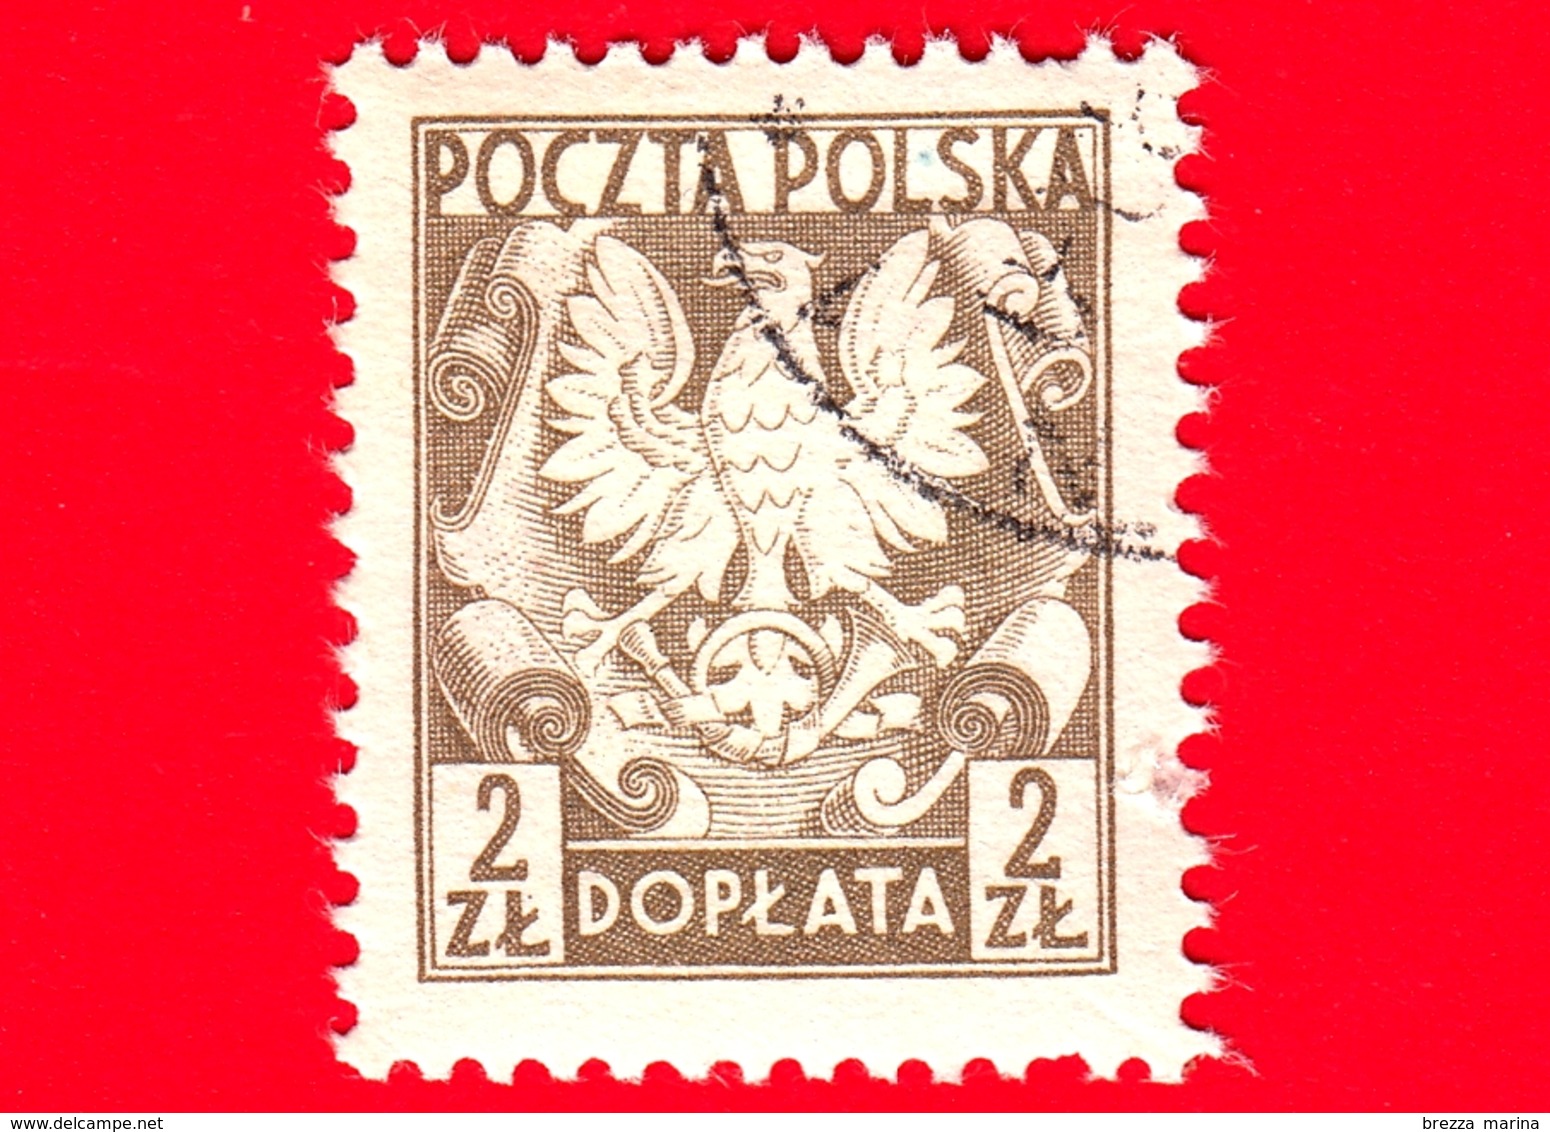 POLONIA - POLSKA - Usato - 1951 - Segnatasse - Taxe - Aquila - Coat Of Arms Of Poland - 2 - Taxe